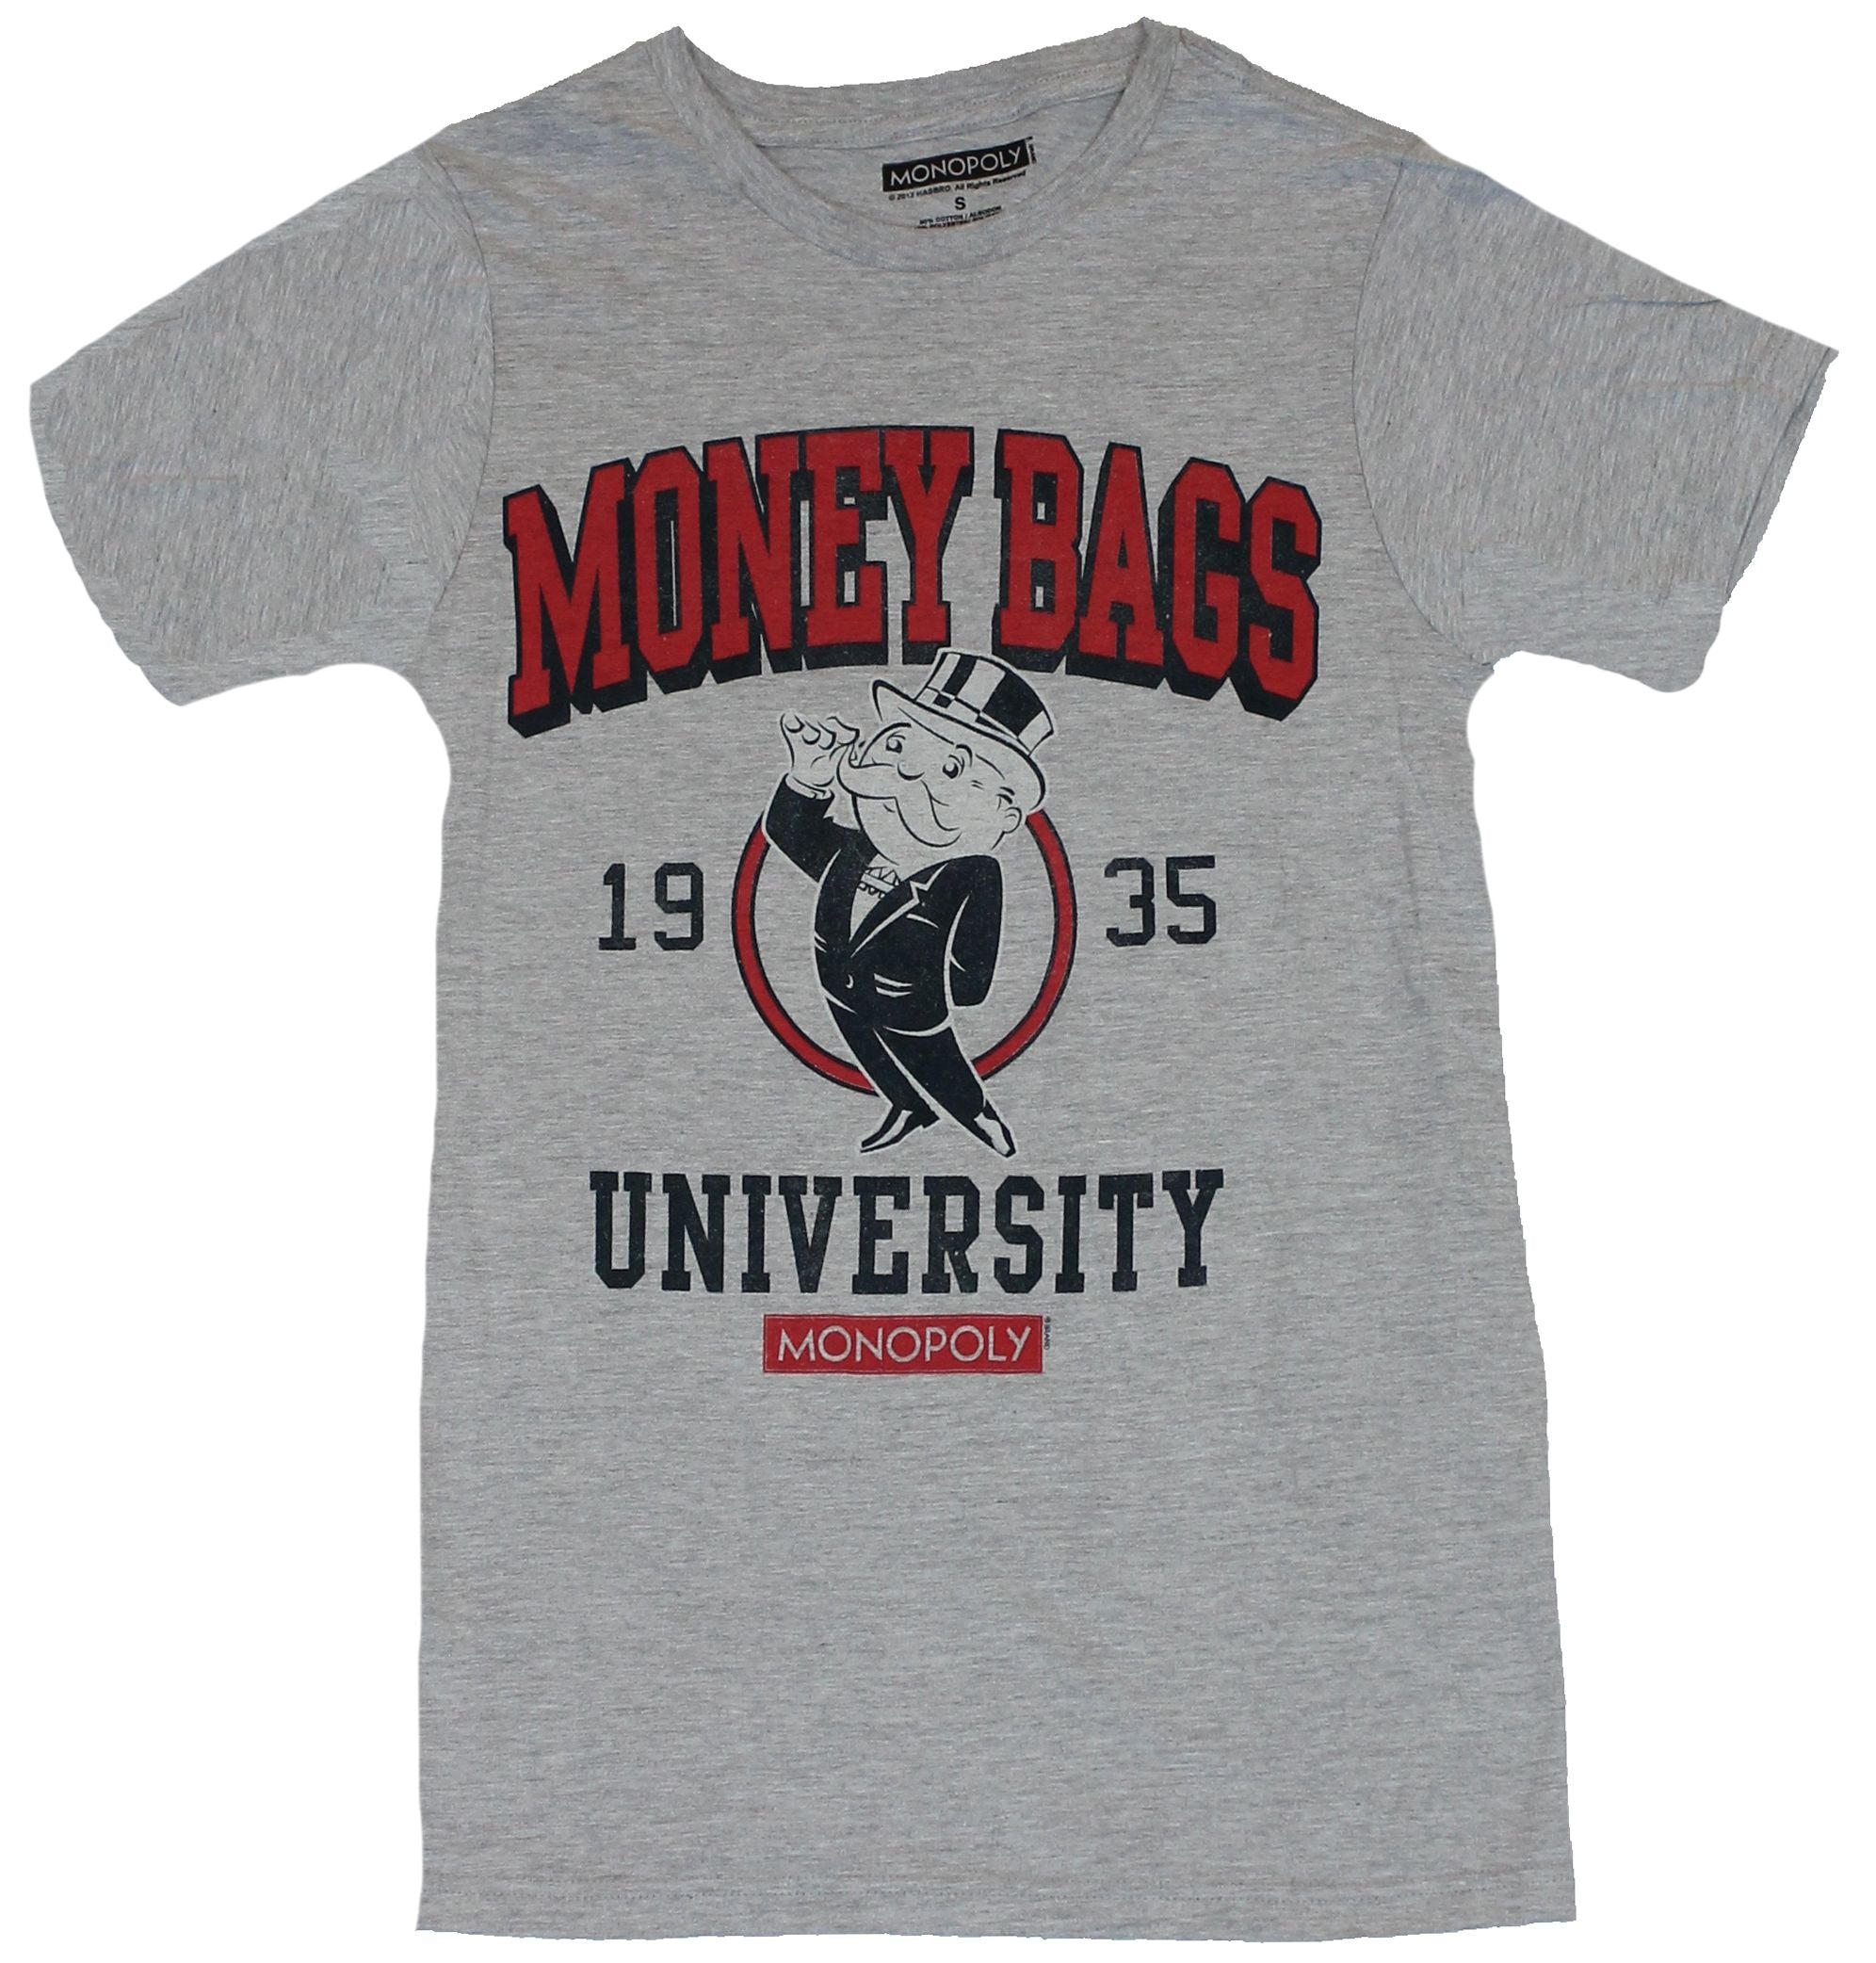 Monopoly Mens T-Shirt - "Money Bags University" 1935 Pennybags Image